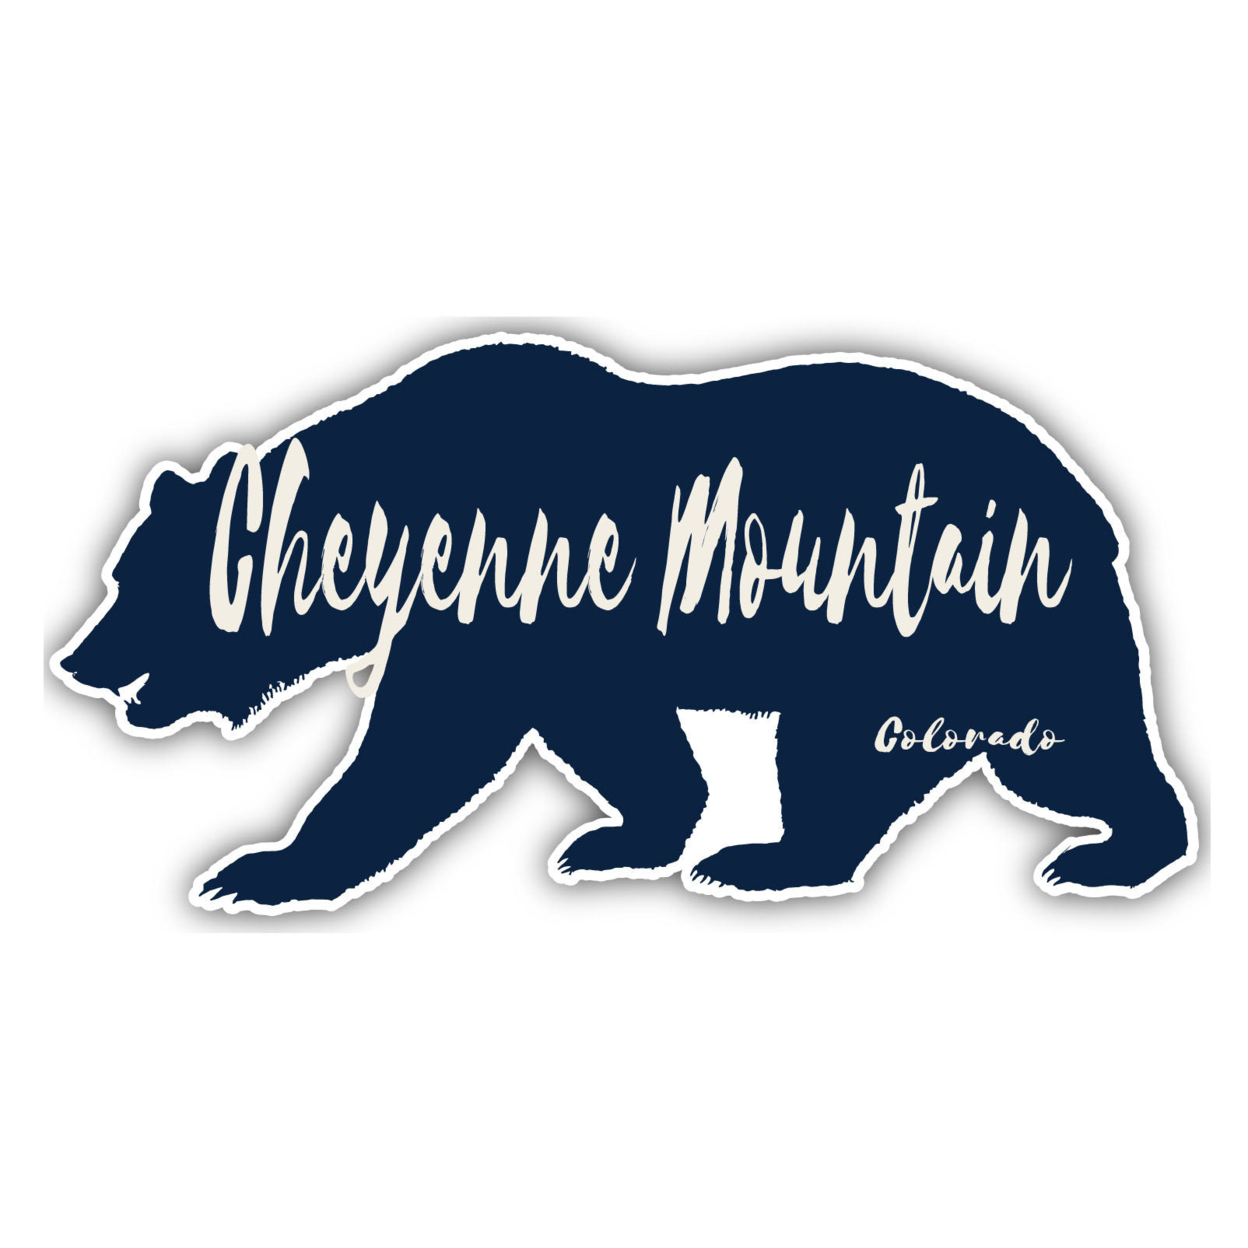 Cheyenne Mountain Colorado Souvenir Decorative Stickers (Choose Theme And Size) - 4-Pack, 2-Inch, Bear